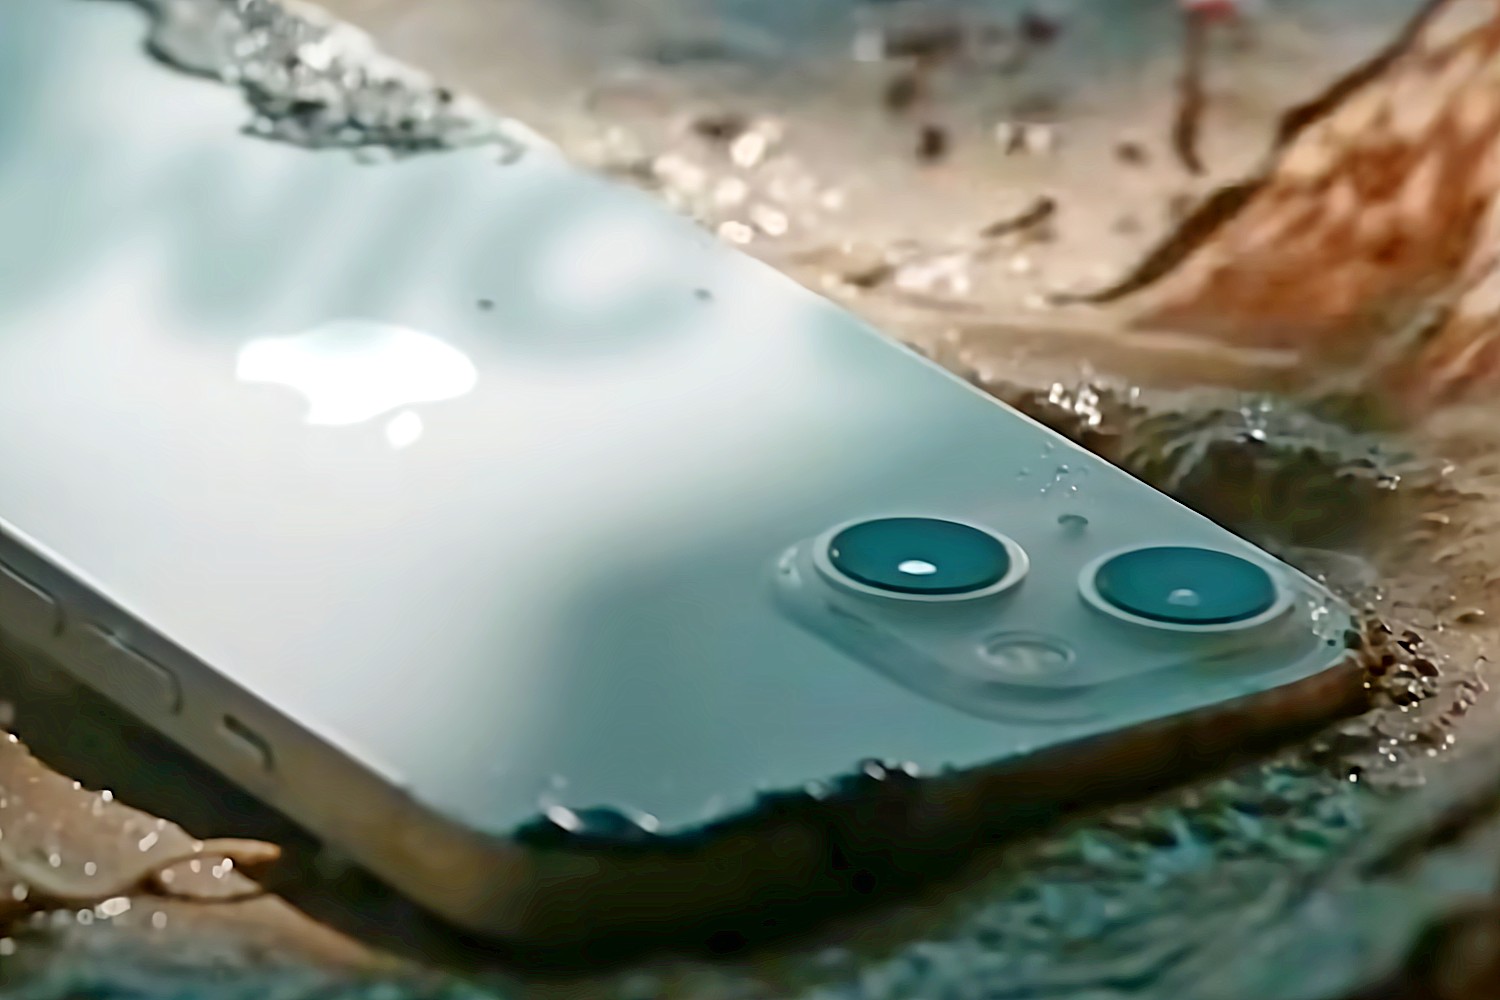 Apple patent goals of iPhones operating just great underwater